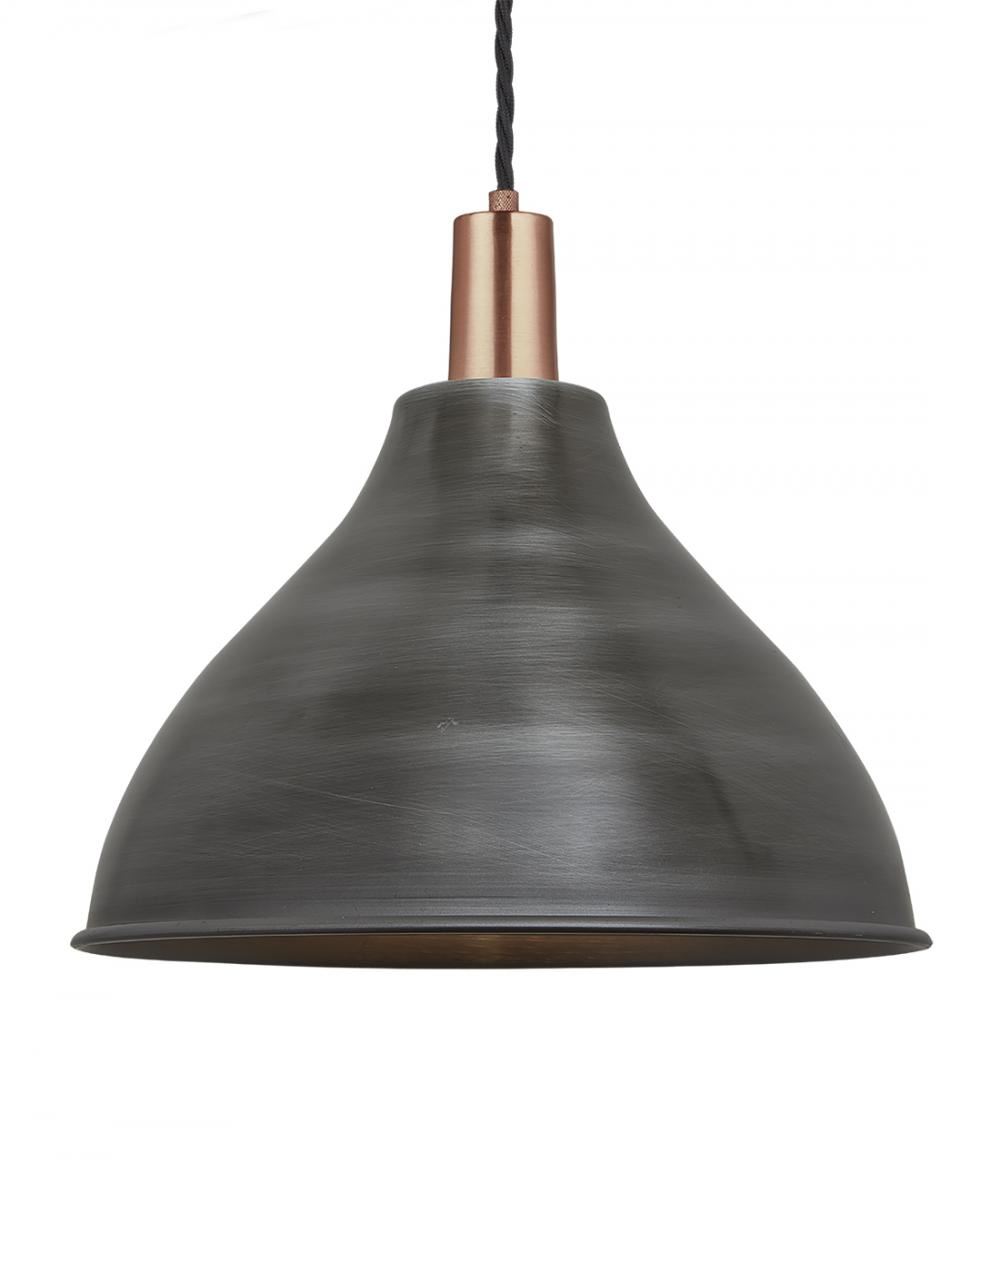 Industville Brooklyn Cone Pendant Sleek Fittings Large Pewter Shade Copper Holder Grey Designer Pendant Lighting